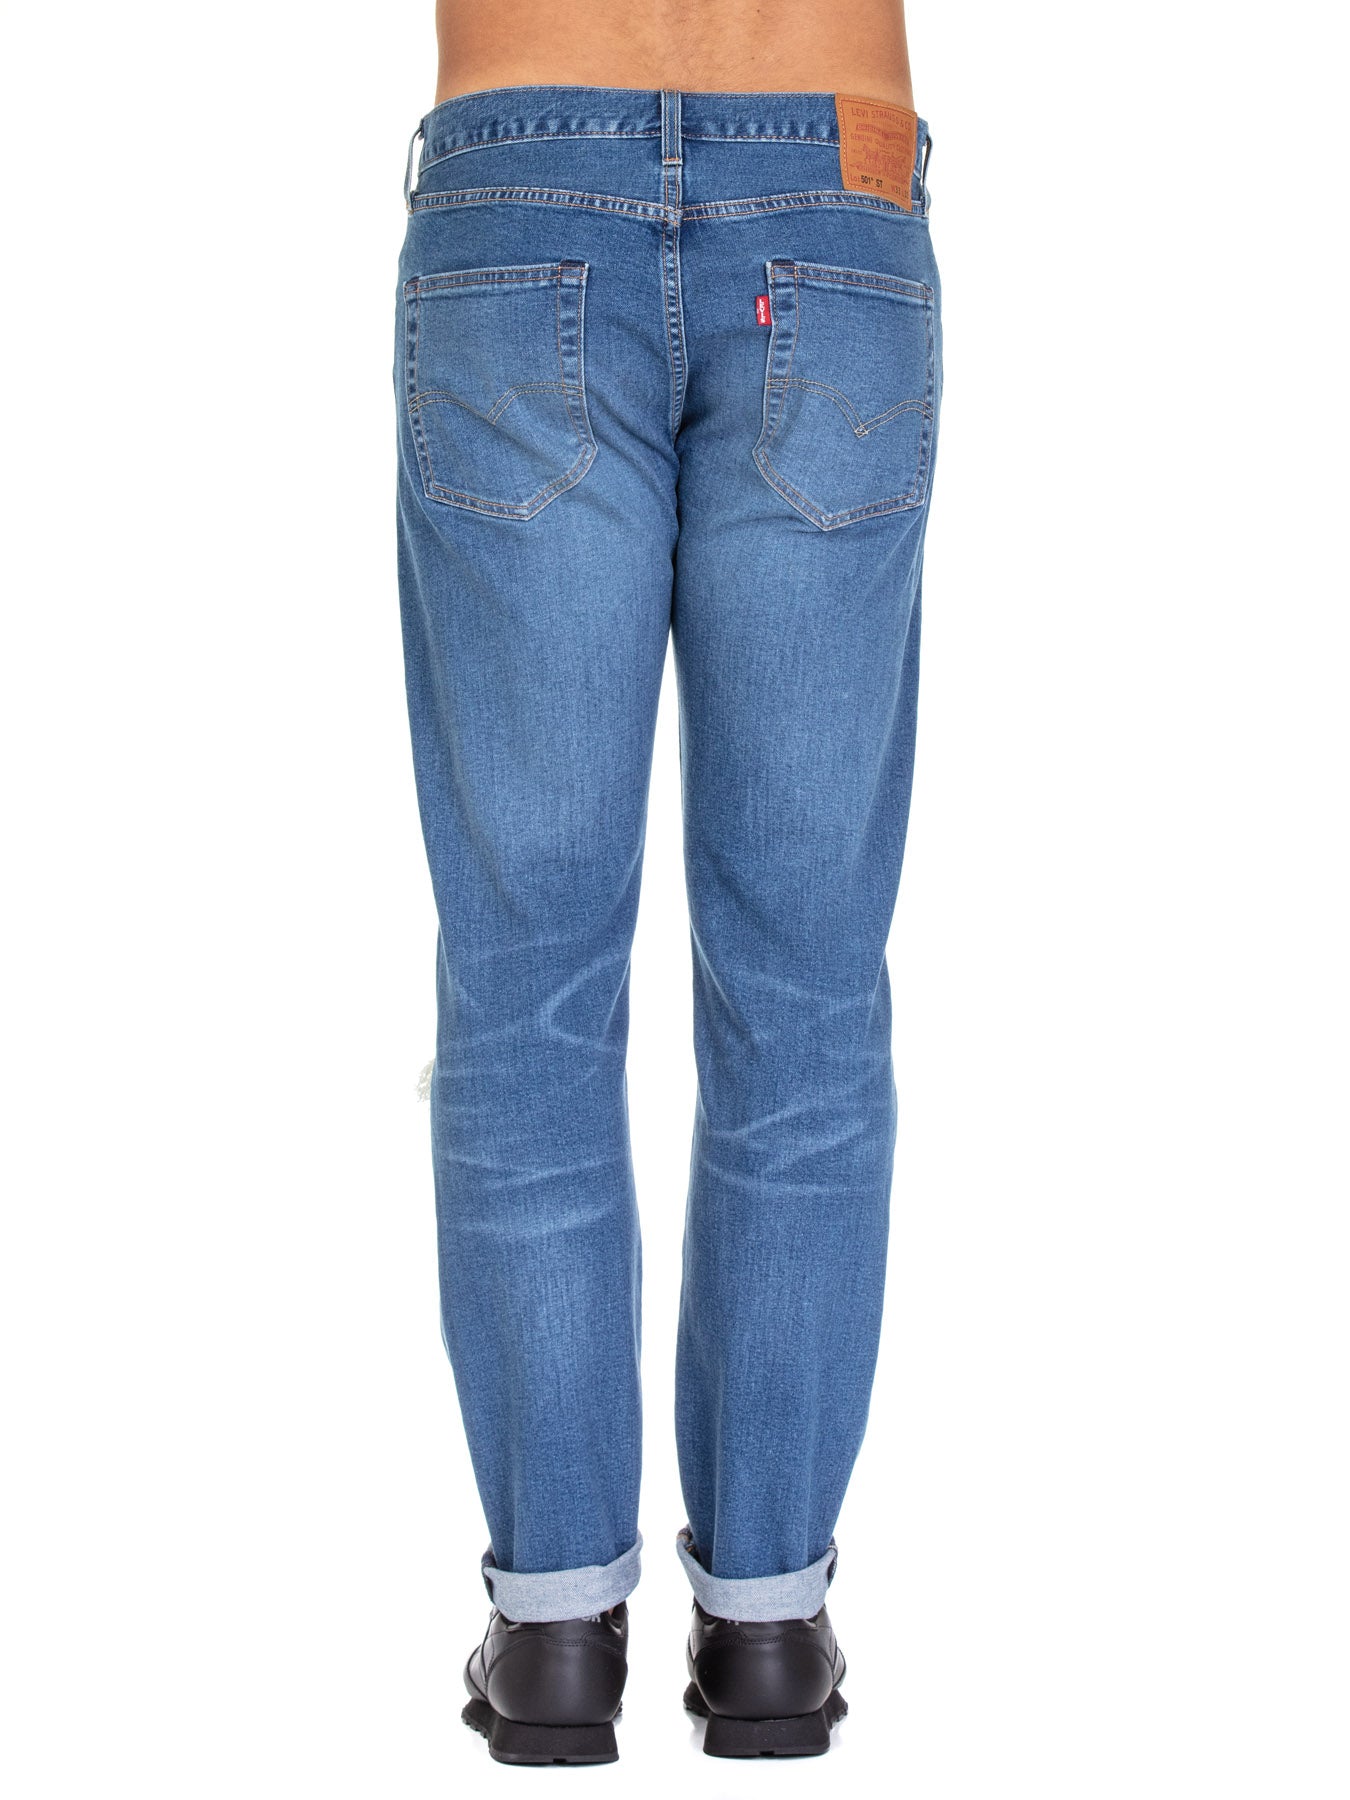 Jeans Uomo 501 Slim Tapered